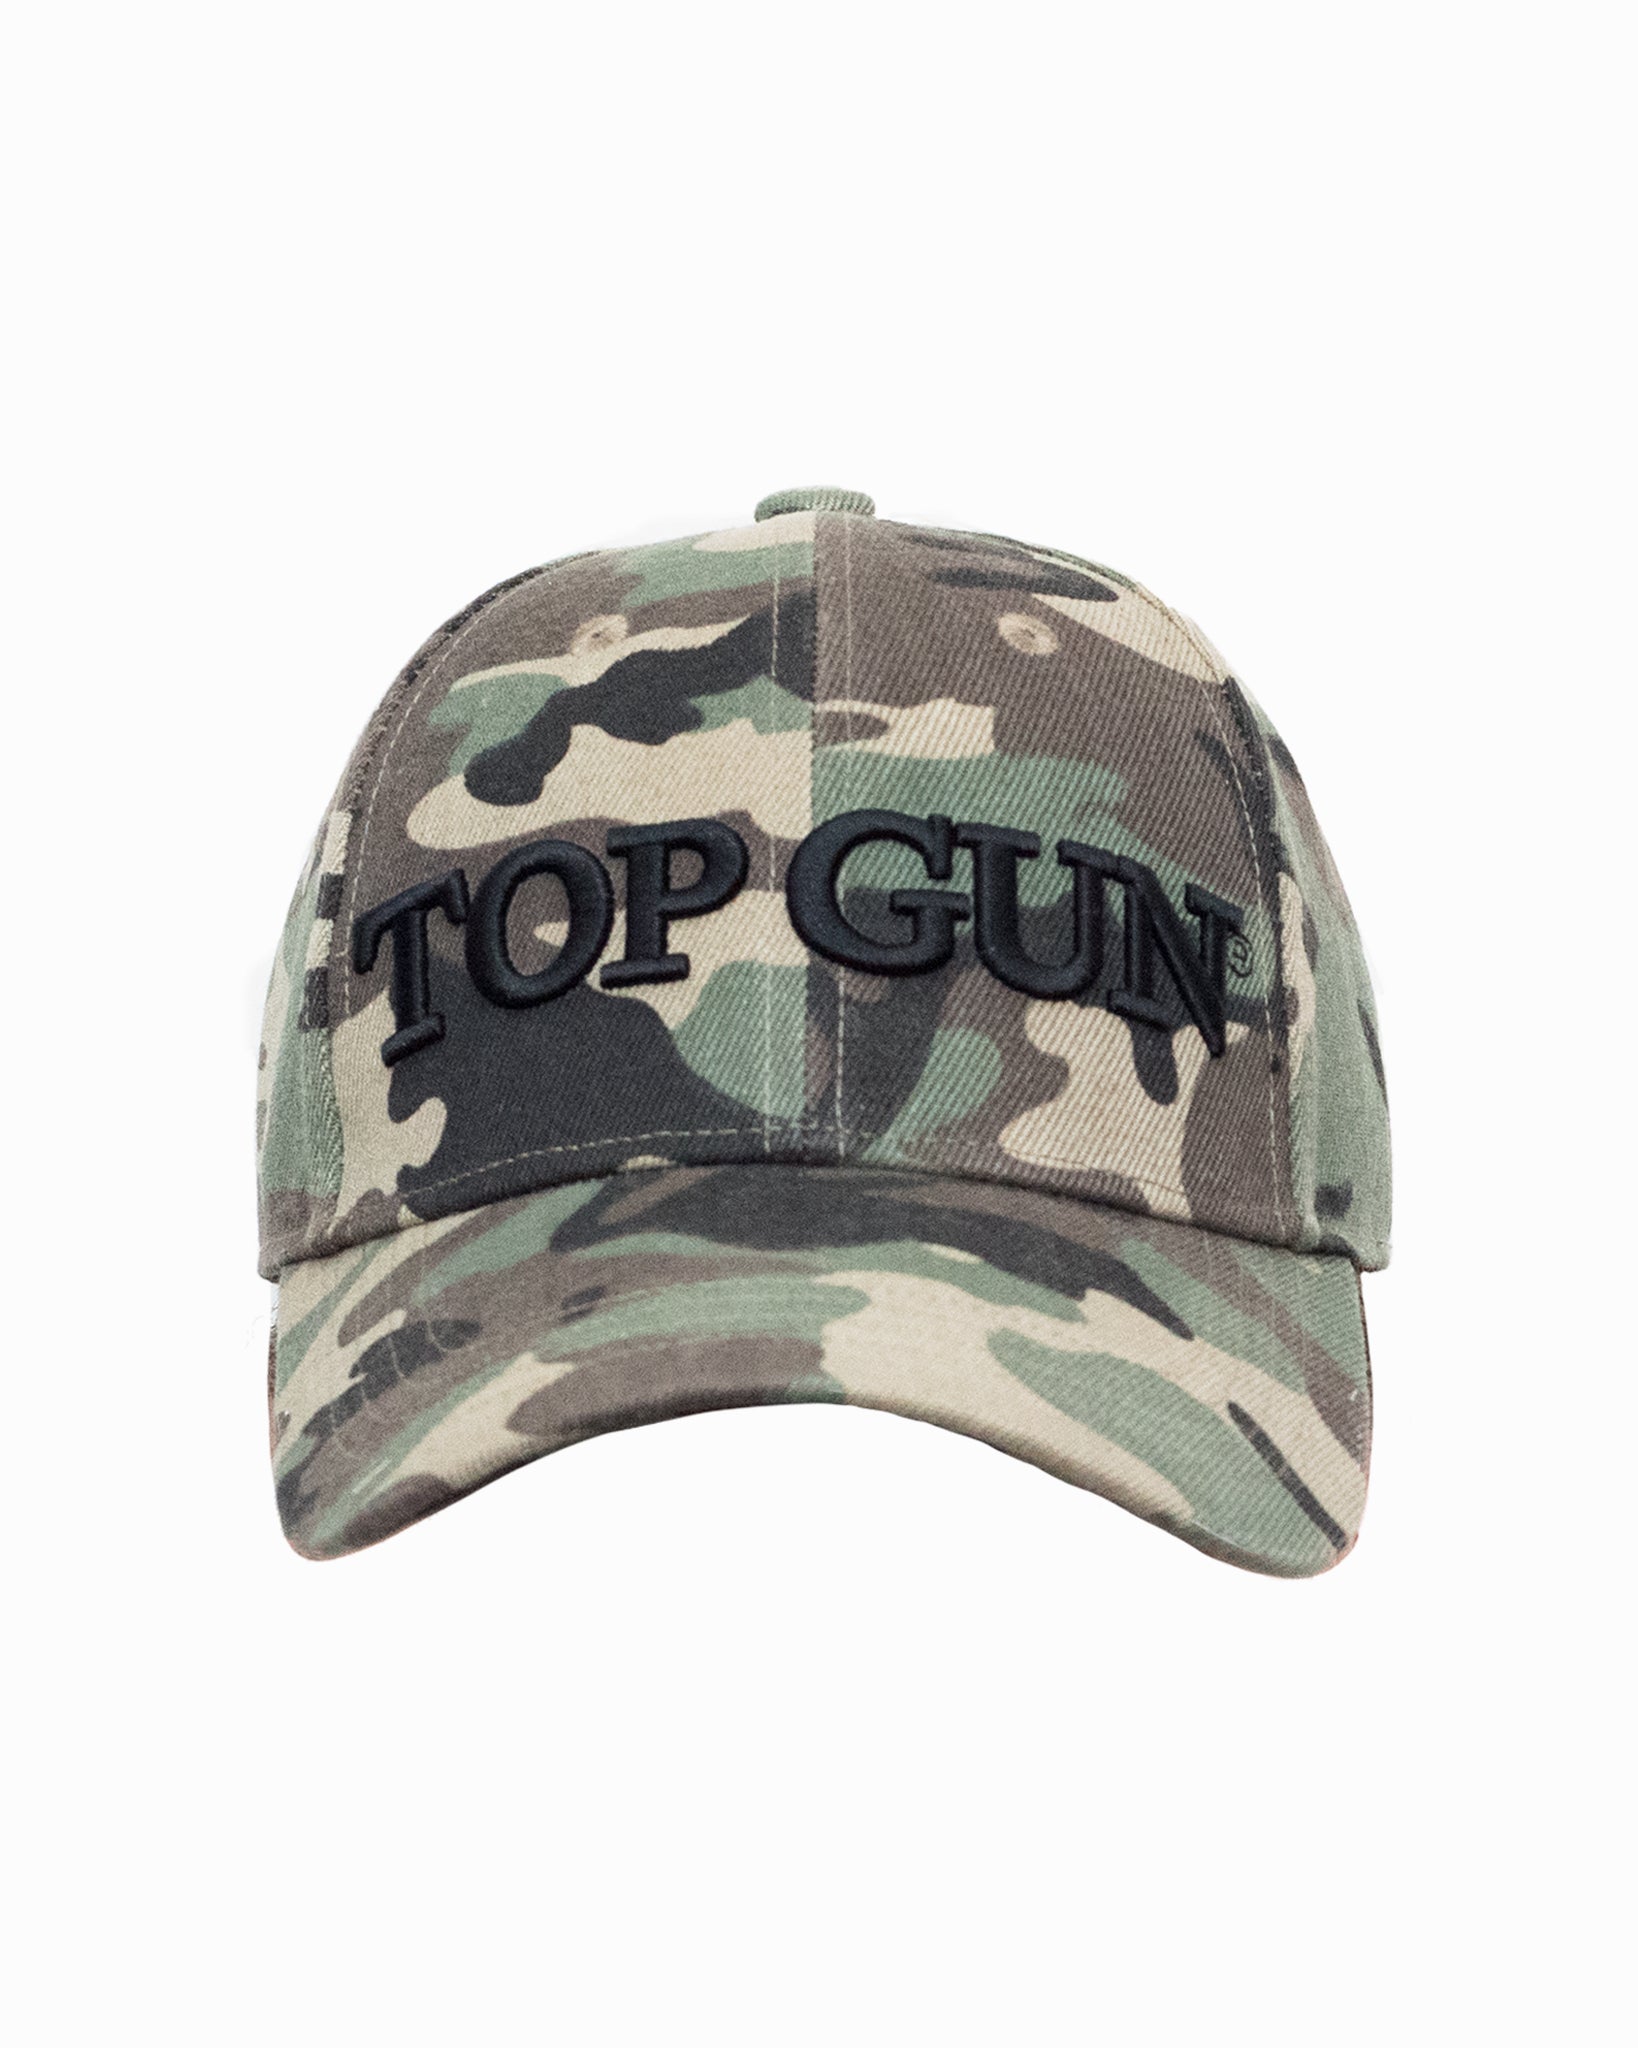 Logo Cap Top Gun | The Top Gun Official Store – Top Gun Store